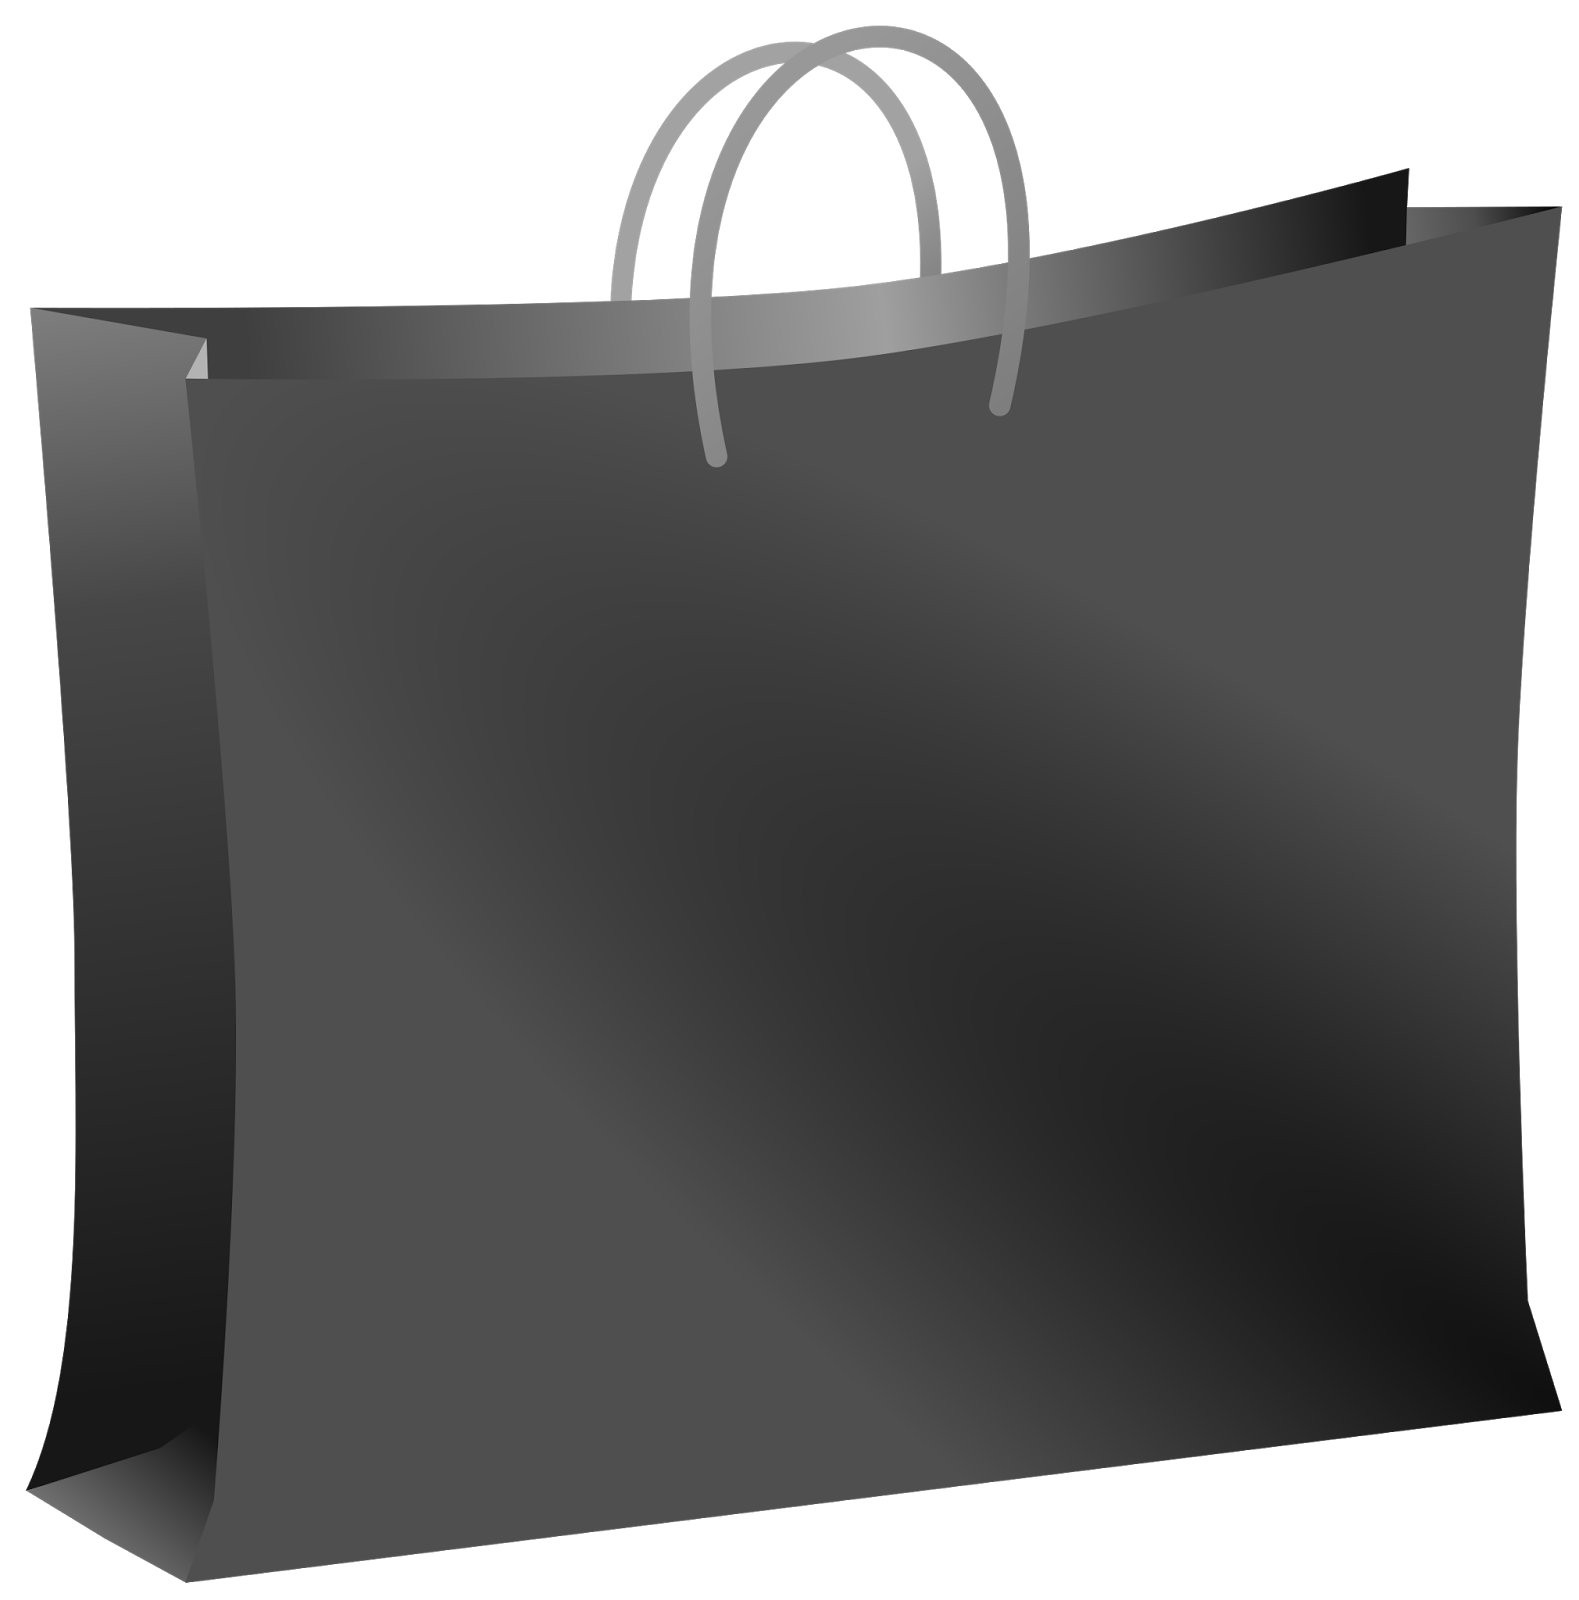 Shopping Bag Clip Art Image Cardboard - 쇼핑백이미지 클립아트자료 모음 - kakaoss